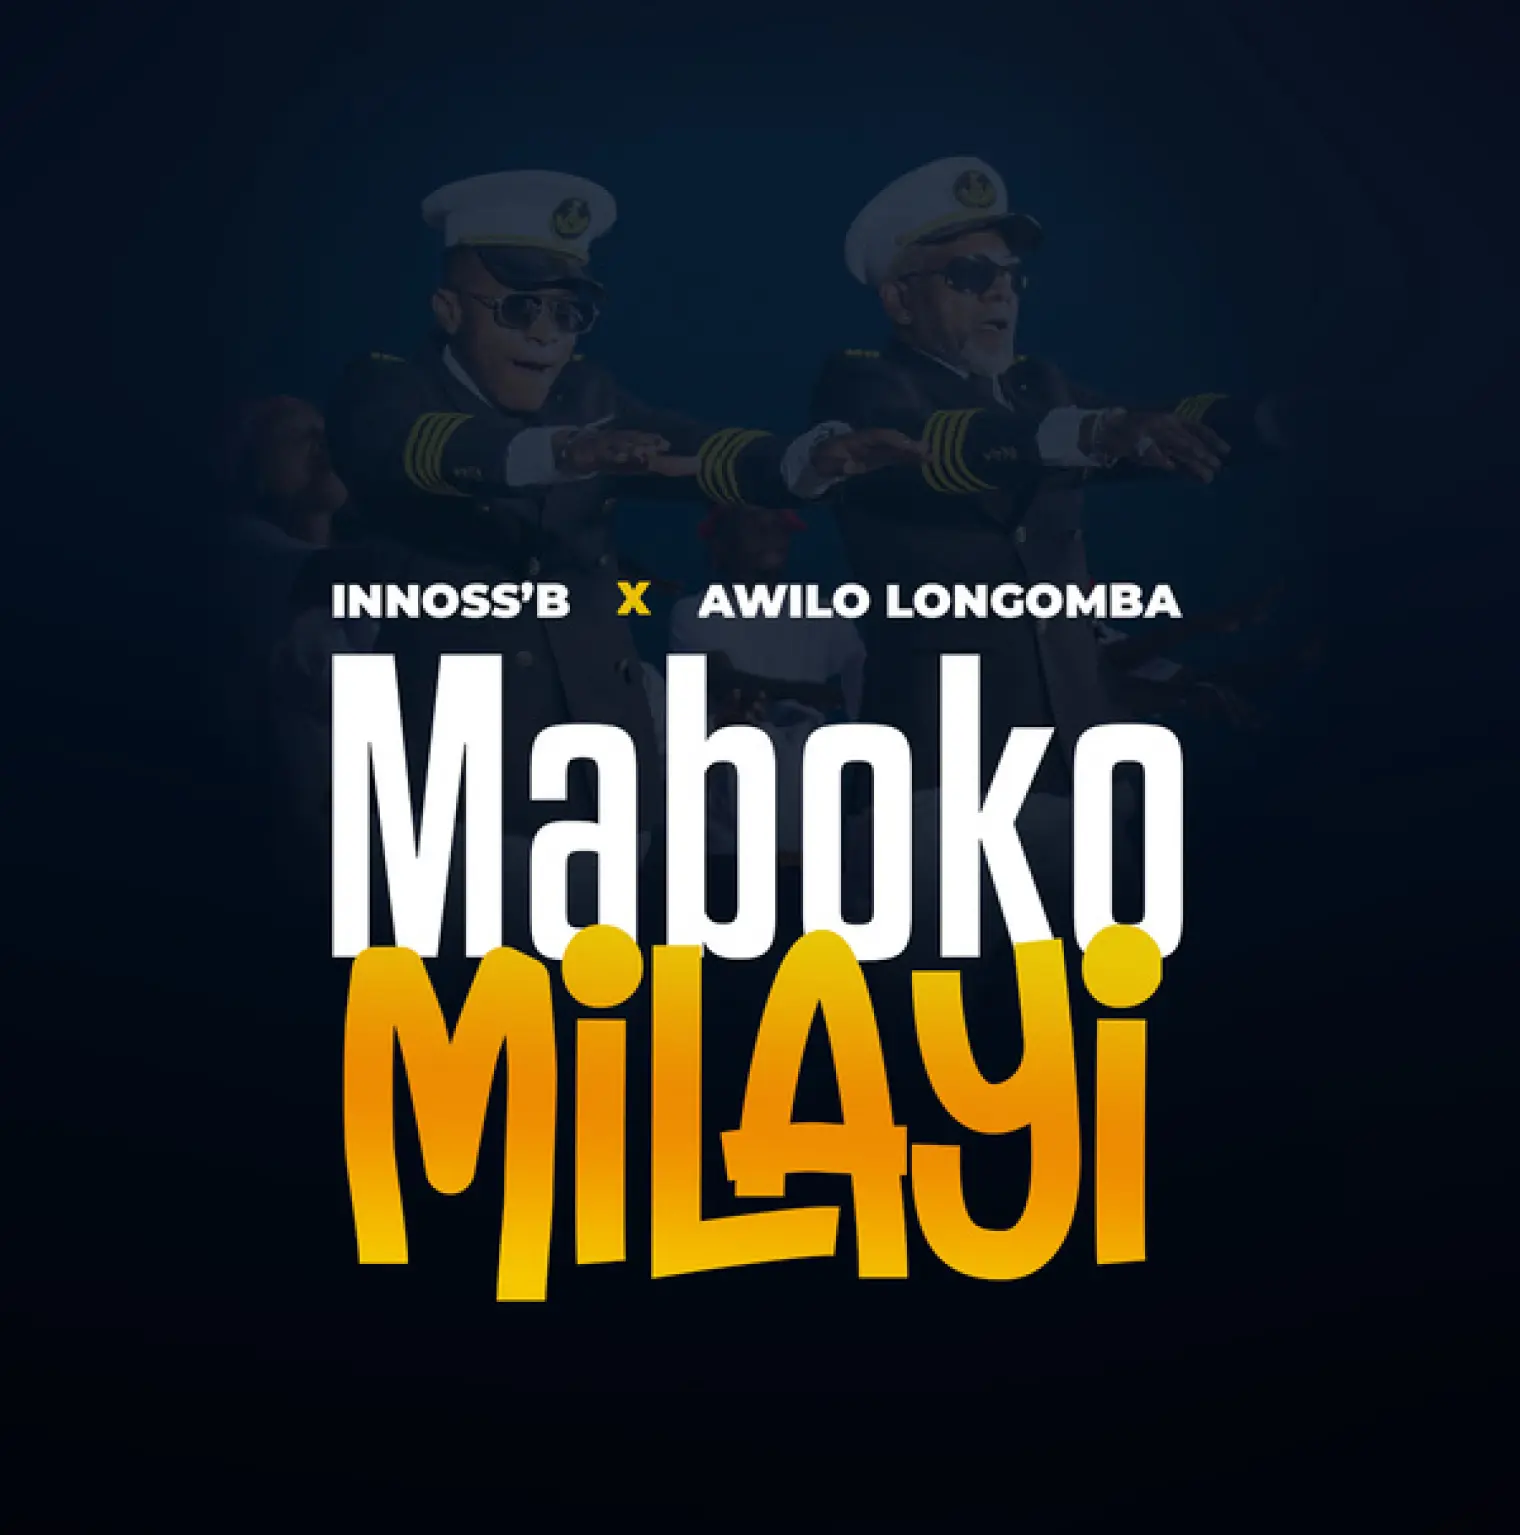 Maboko Milayi -  Innoss'B 